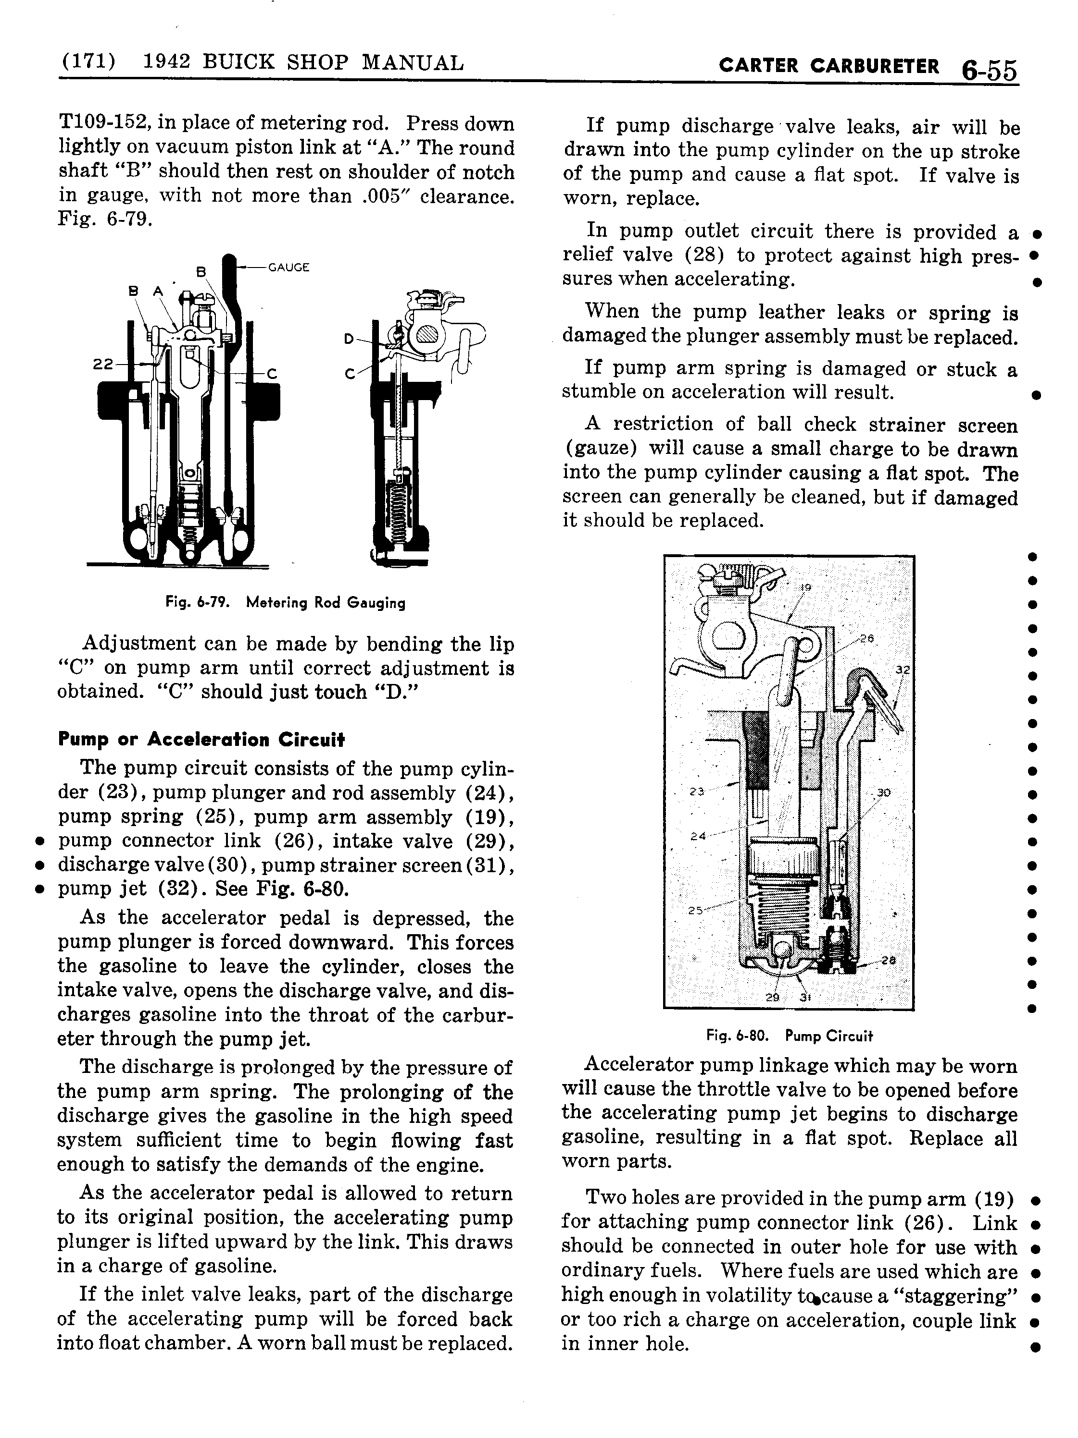 n_07 1942 Buick Shop Manual - Engine-056-056.jpg